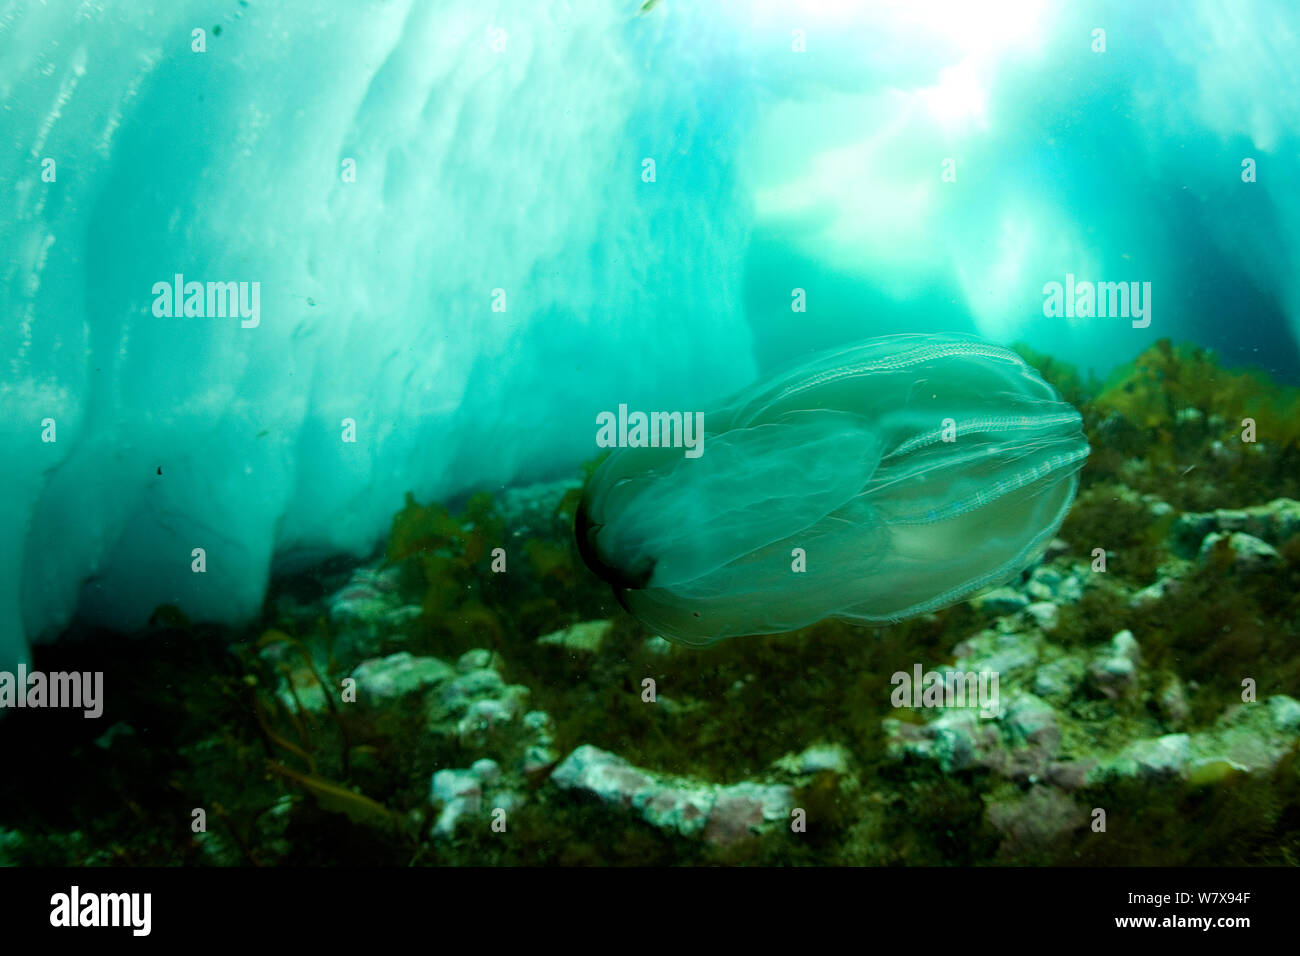 Ctenophora / Comb jelly (Beroe mitrata) under the ice, Baffin island, Canada. Arctic ocean. Stock Photo